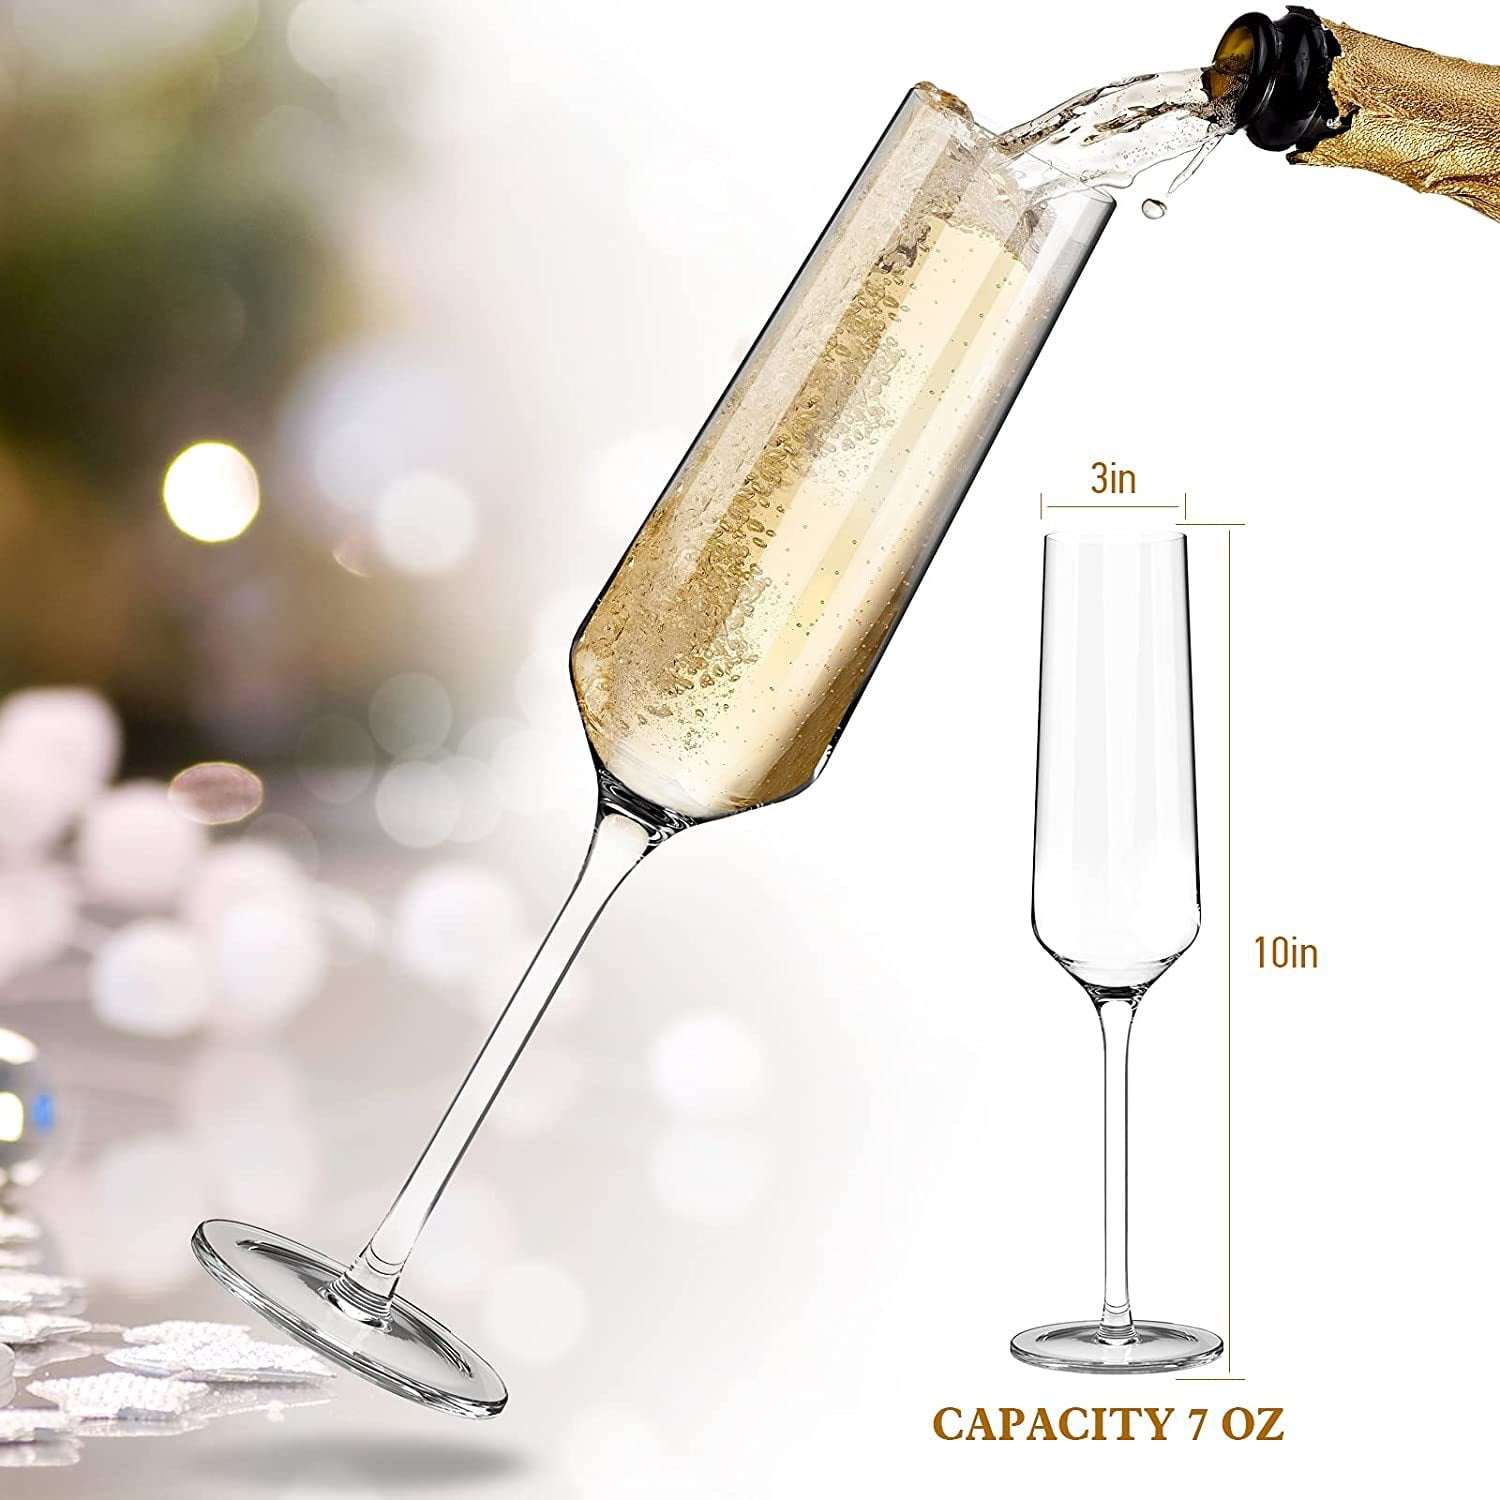 Keltum Lead-Free Crystal Champagne Flutes, Set of 2